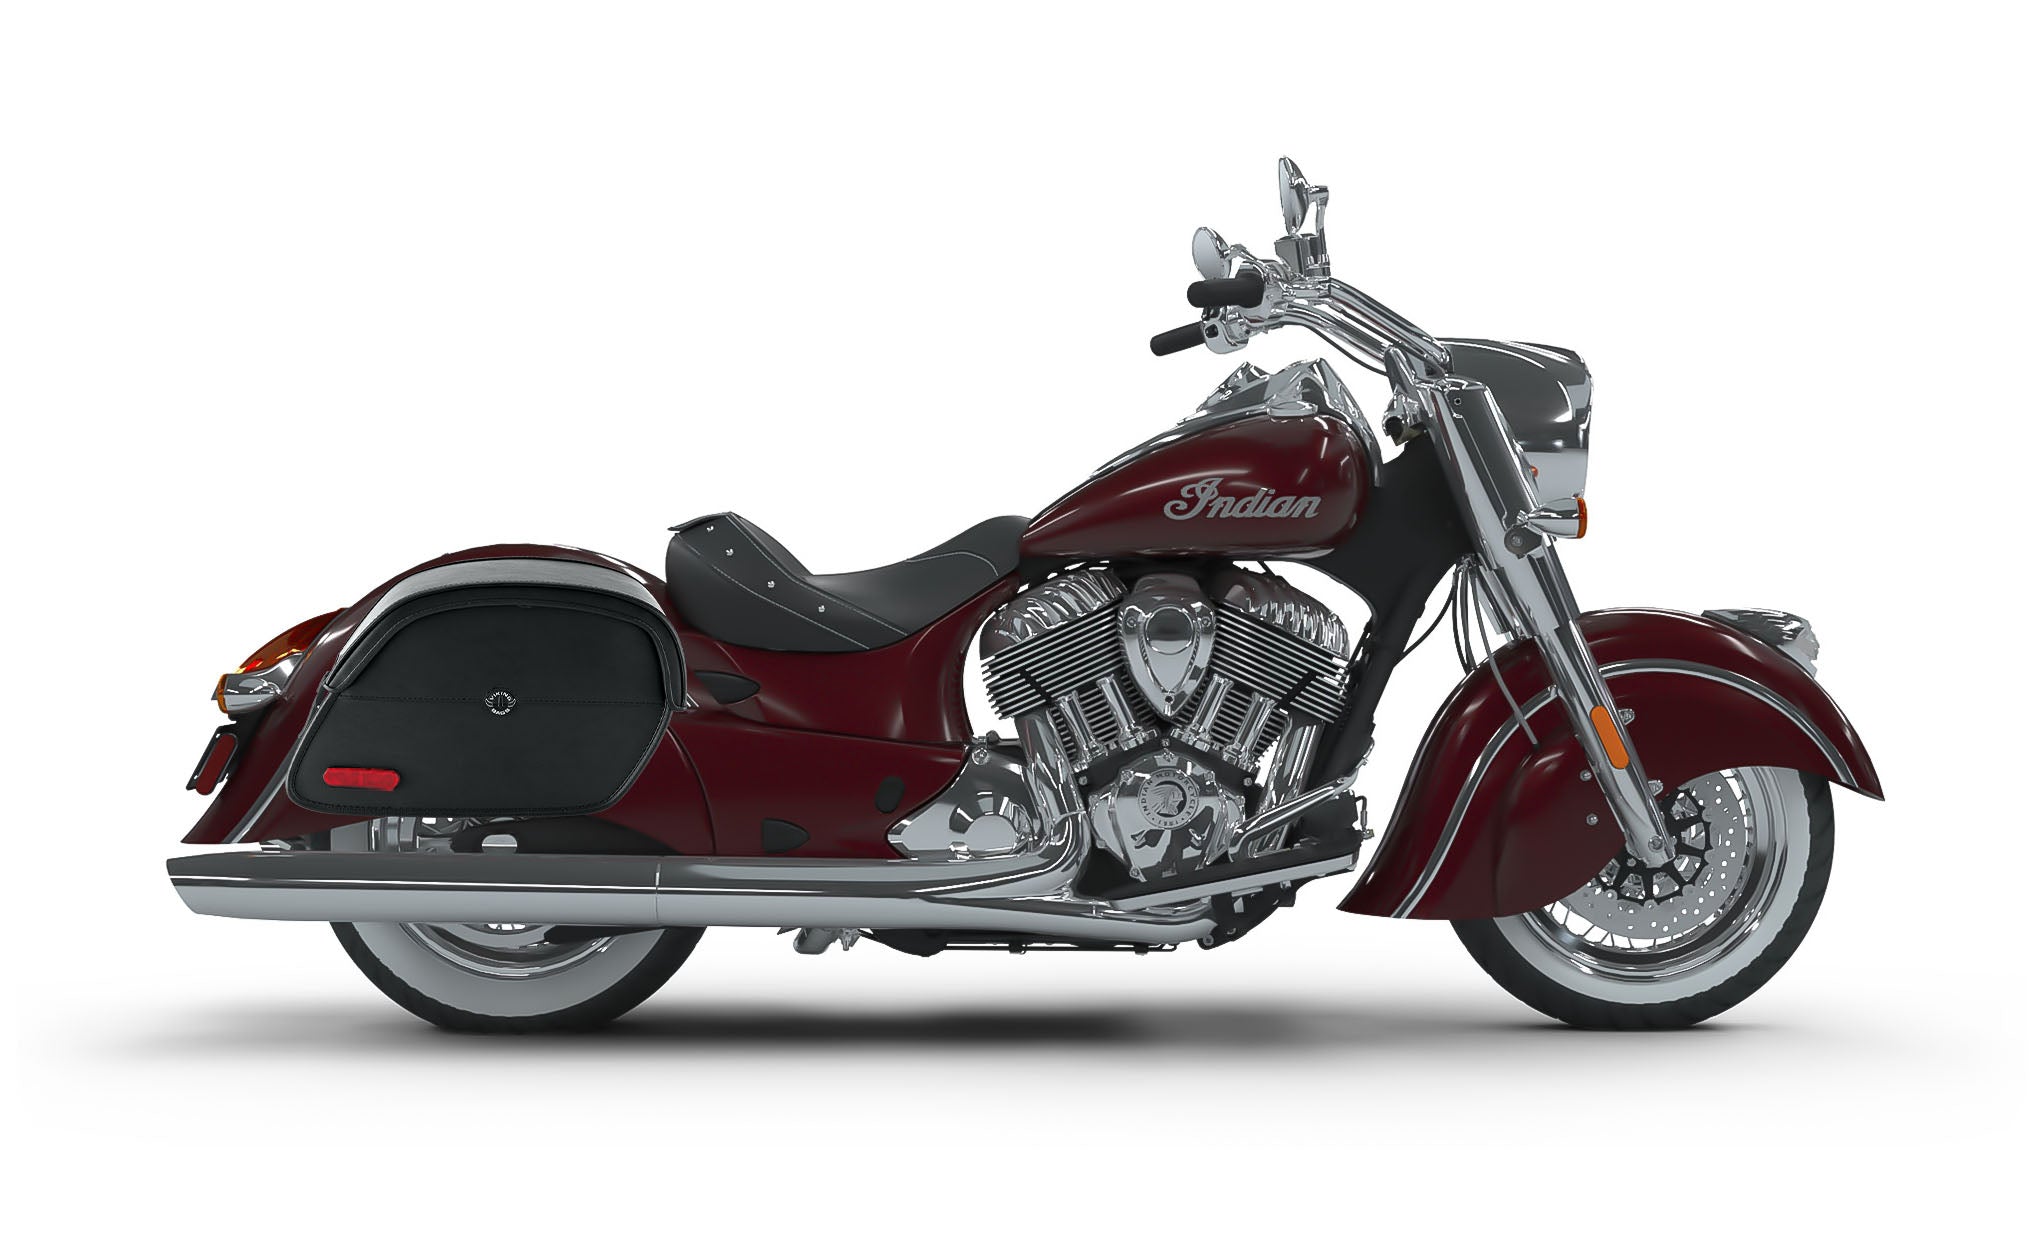 Viking California Large Indian Chief Classic Leather Motorcycle Saddlebags on Bike Photo @expand